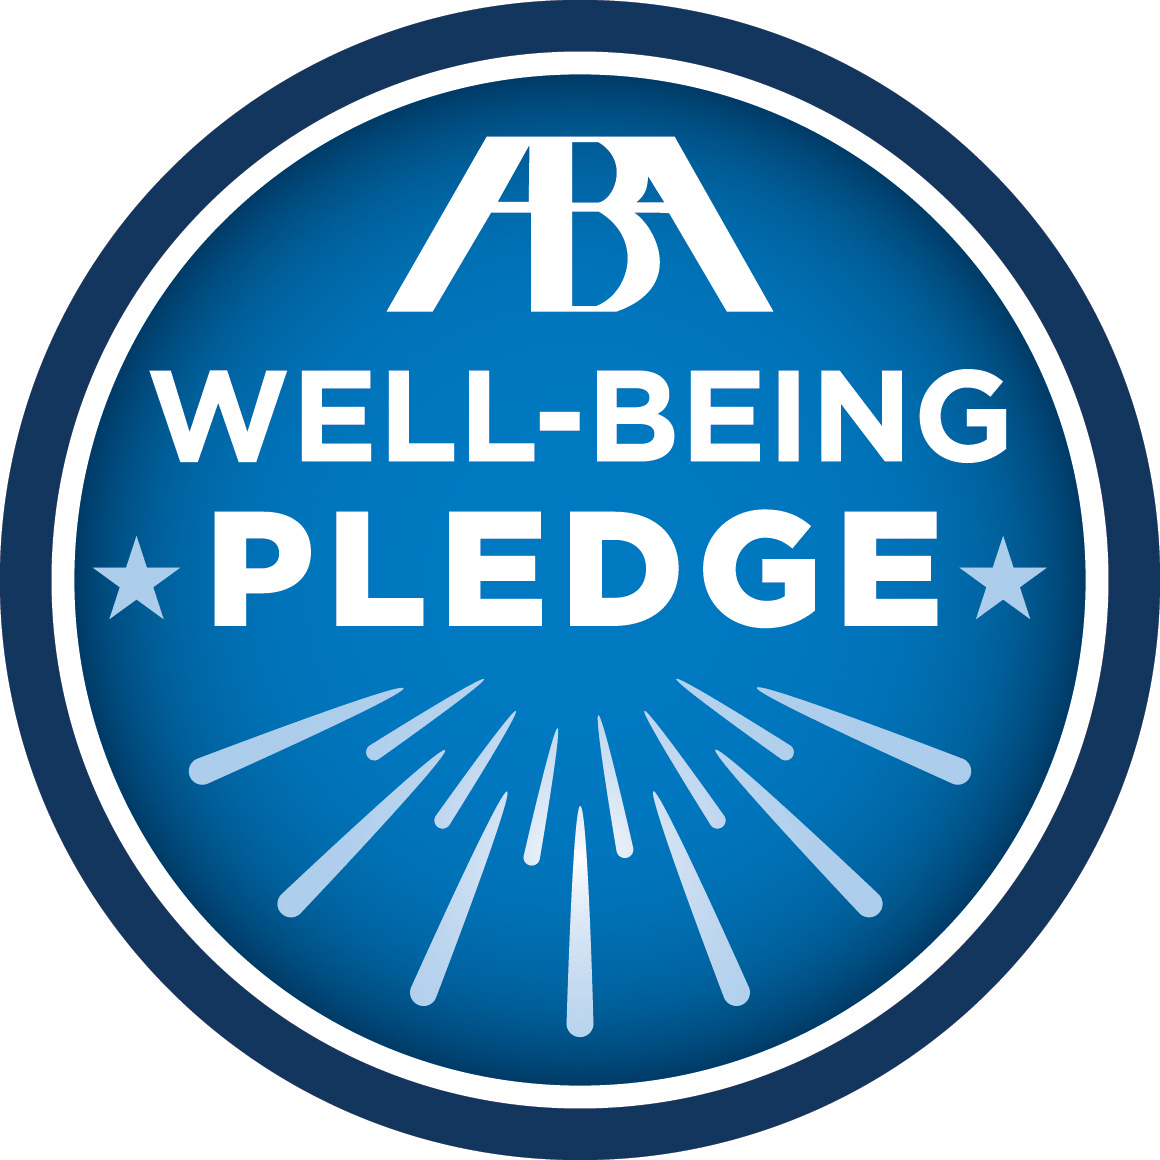 ABA Well-Being Pledge Logo